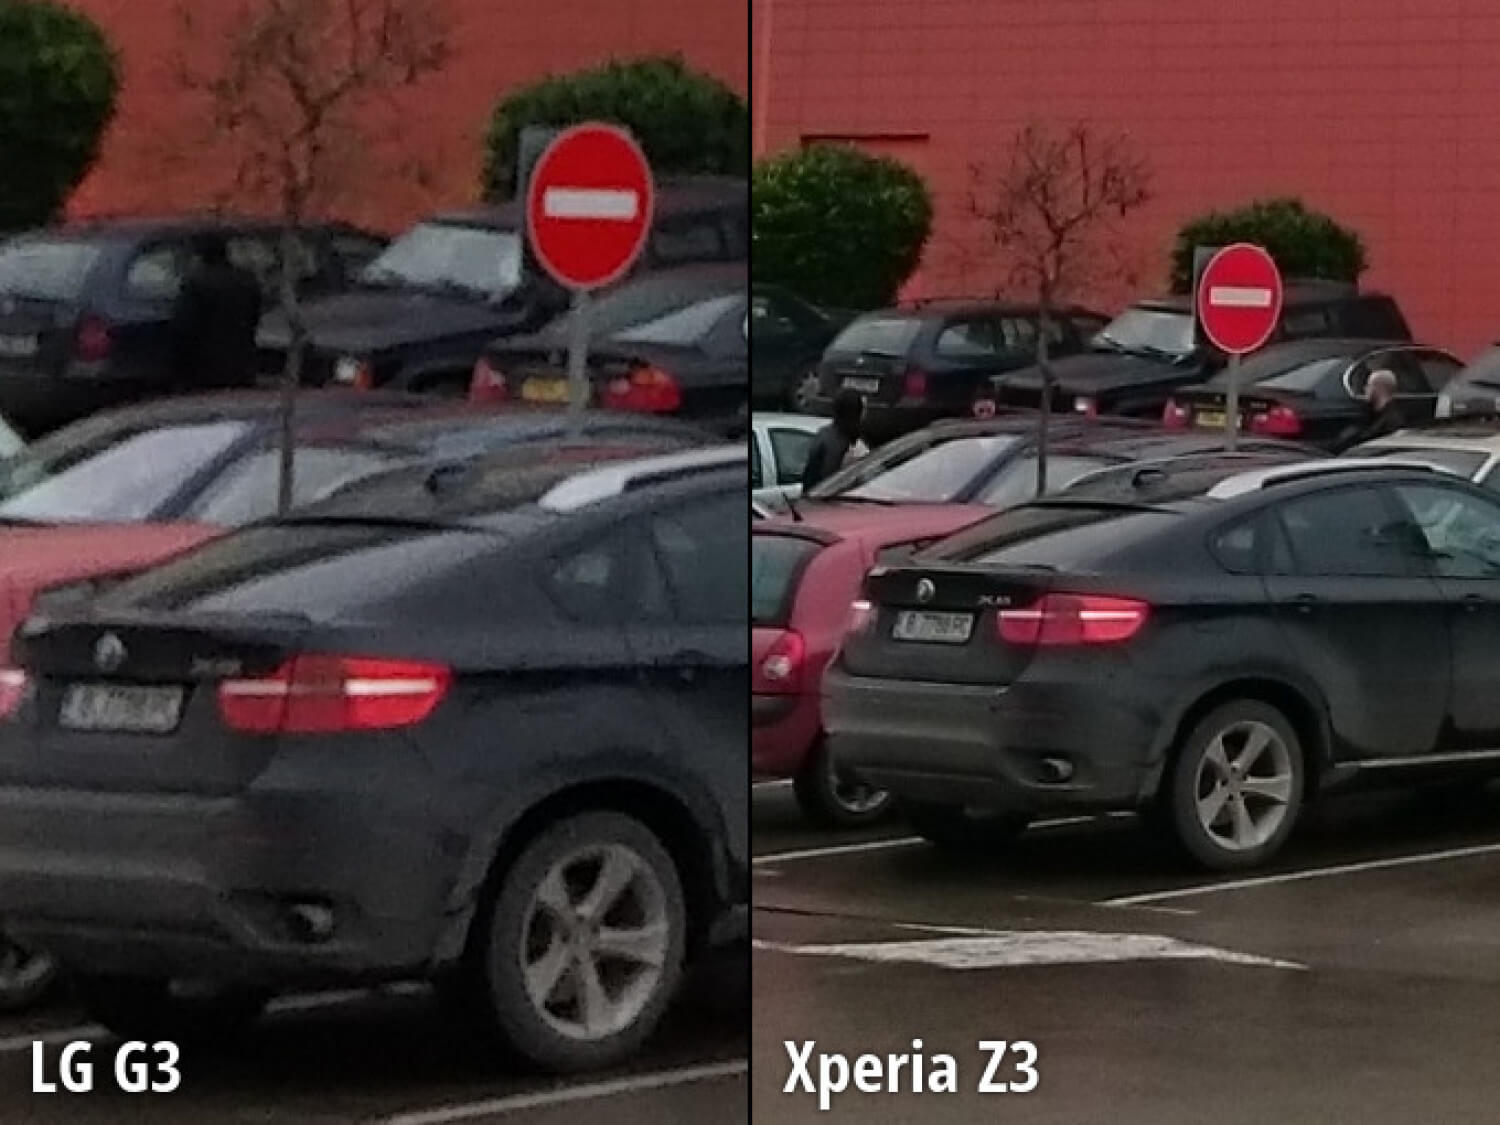 LG-G3-vs-Xperia-Z3-photos-crop-zoom-16